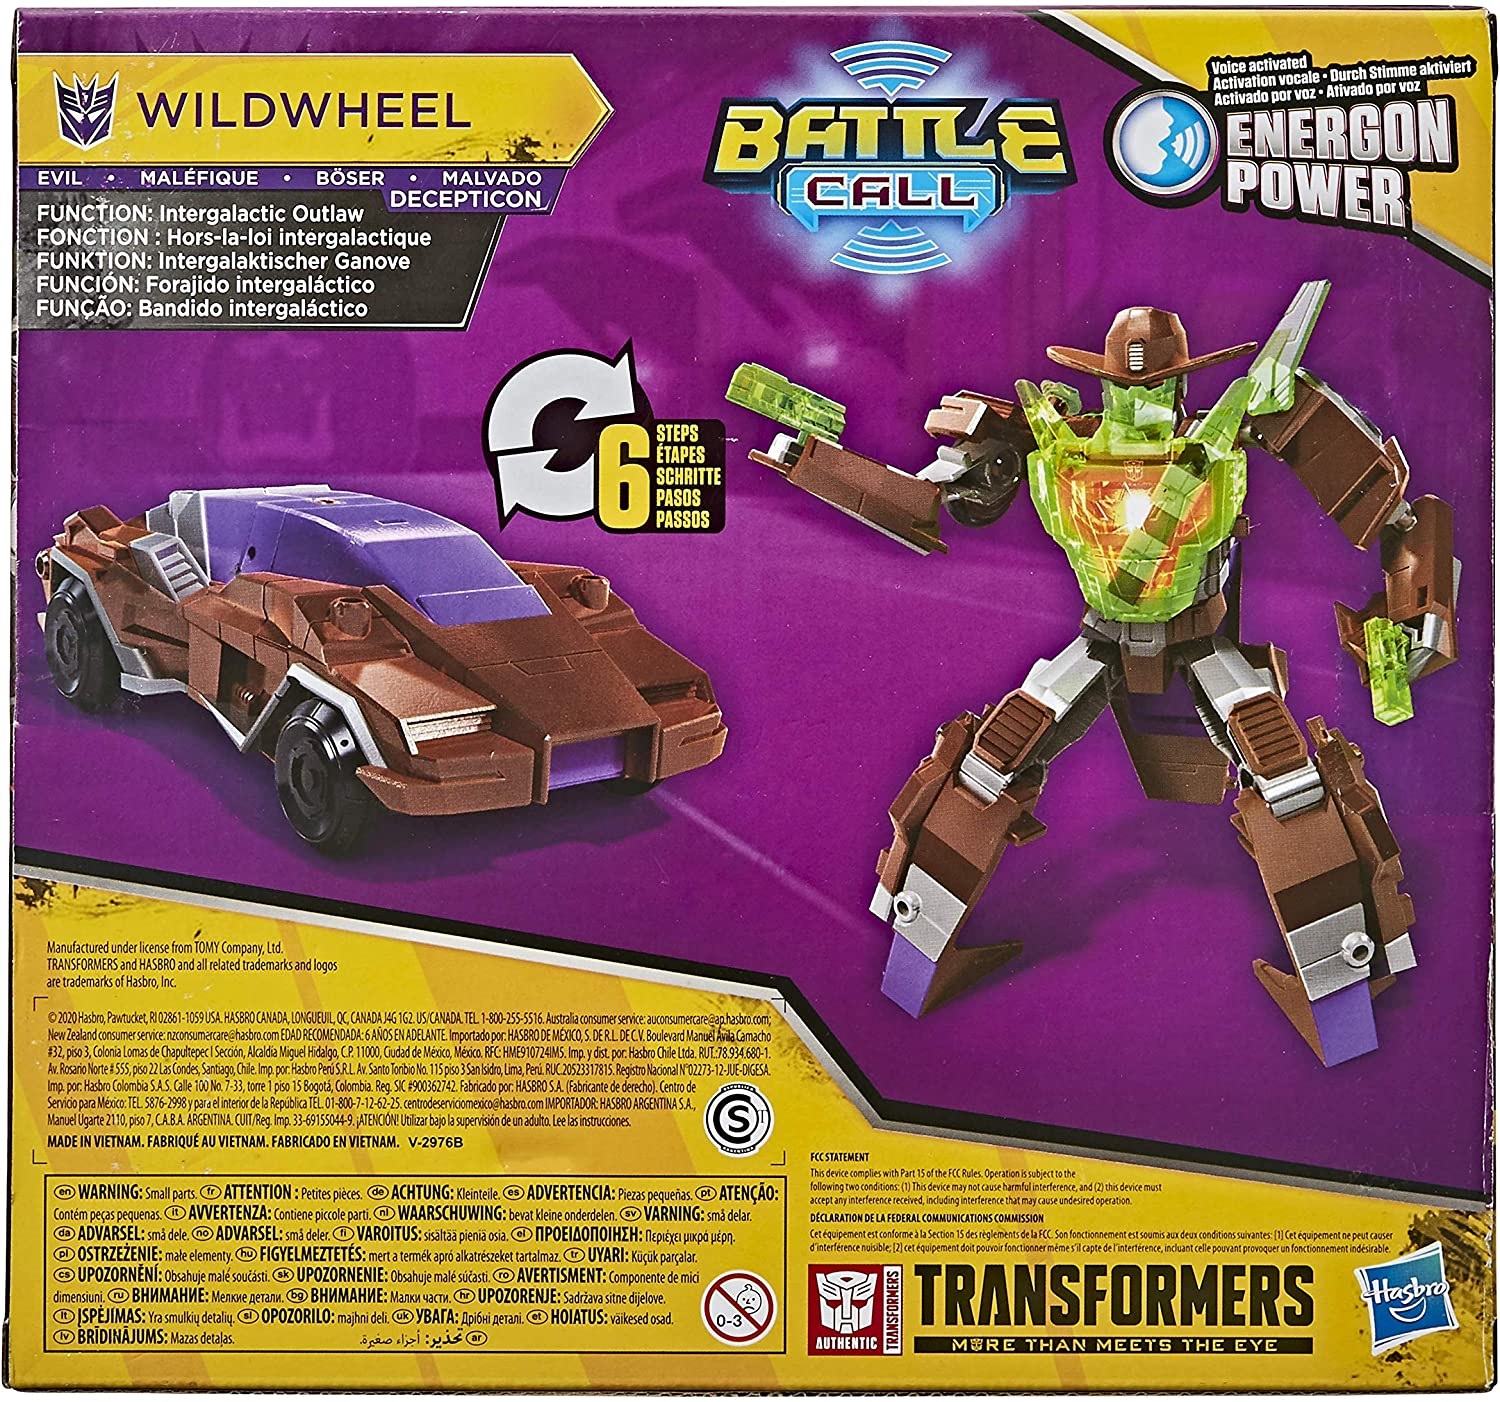 Transformers Cyberverse Battle Call Wildwheel Hasbro E8227 E8374